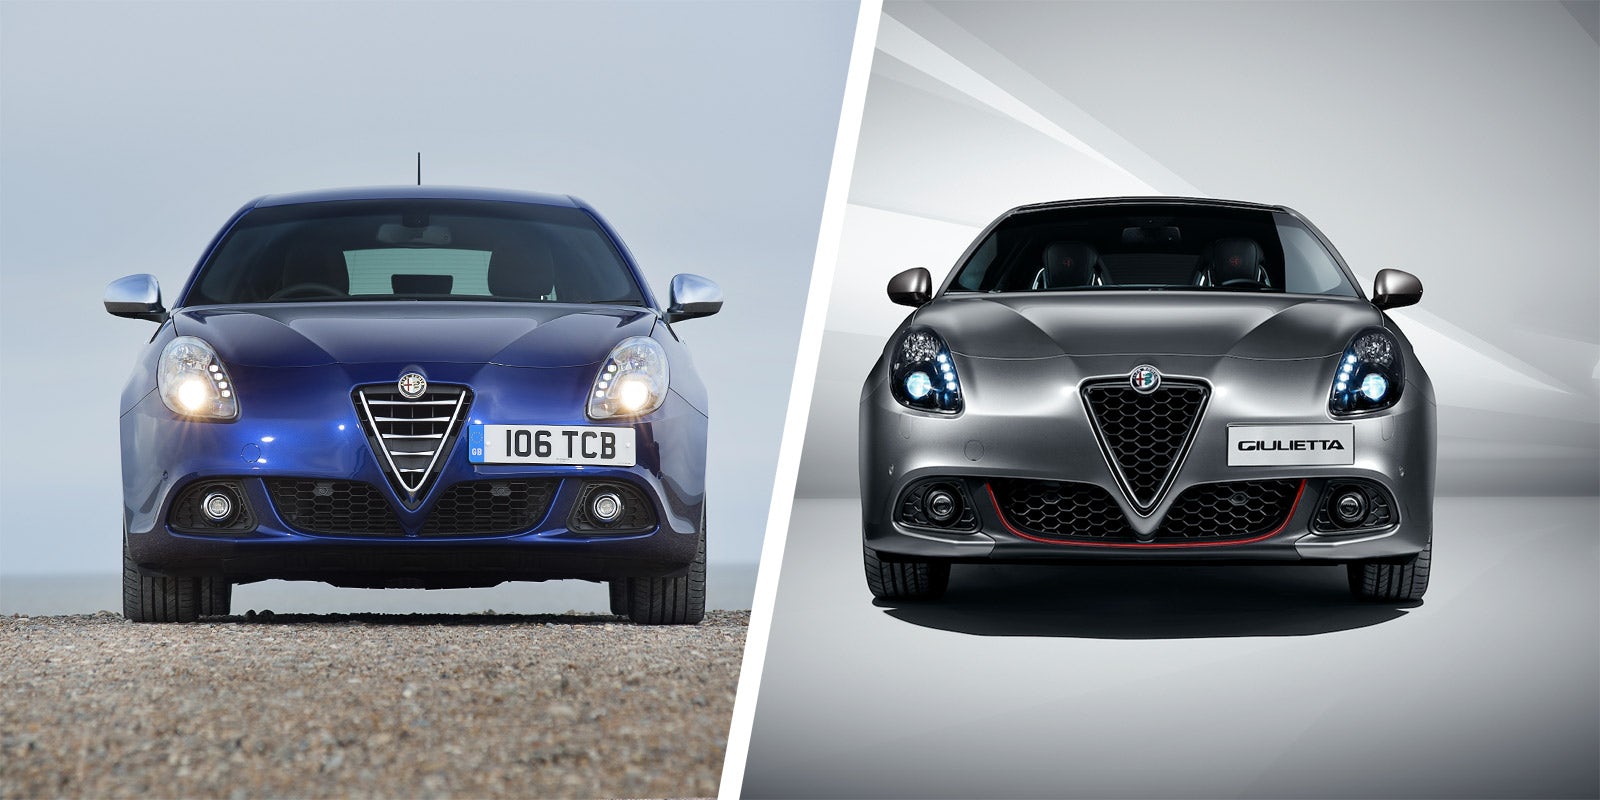 Alfa Romeo Giulietta facelift: old vs new